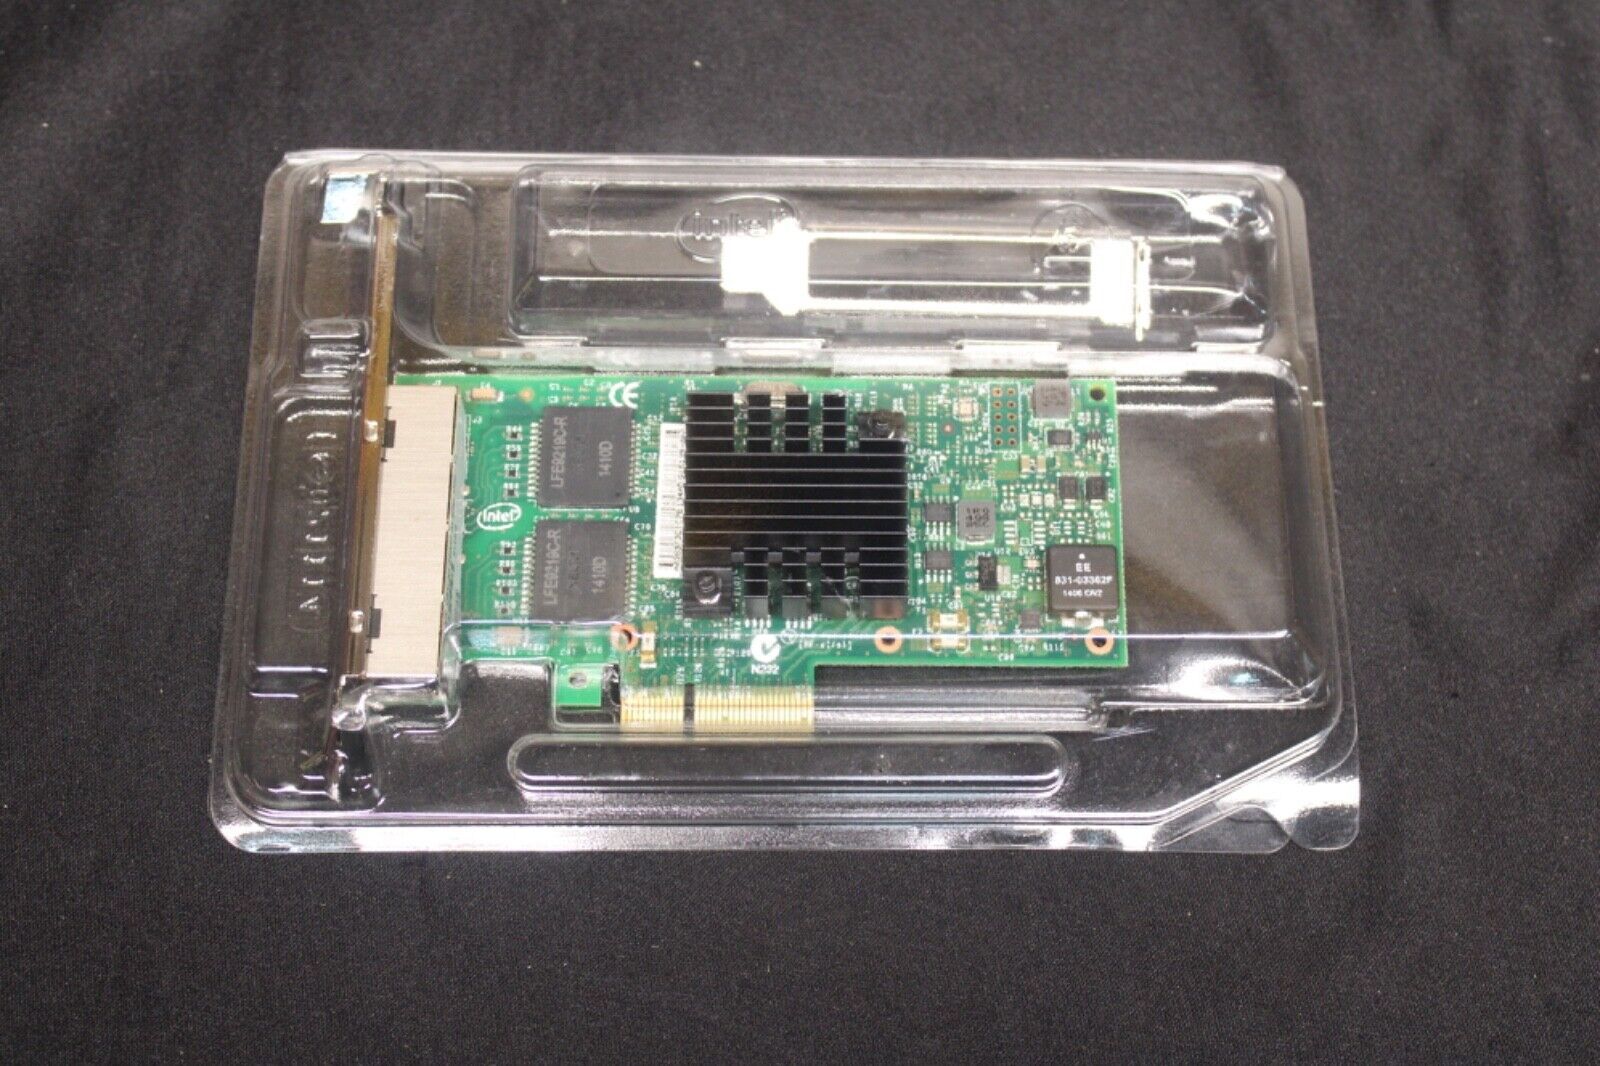 Intel I350-T4 Quad Port Ethernet Server Adapter for Cisco - New Still in Plastic